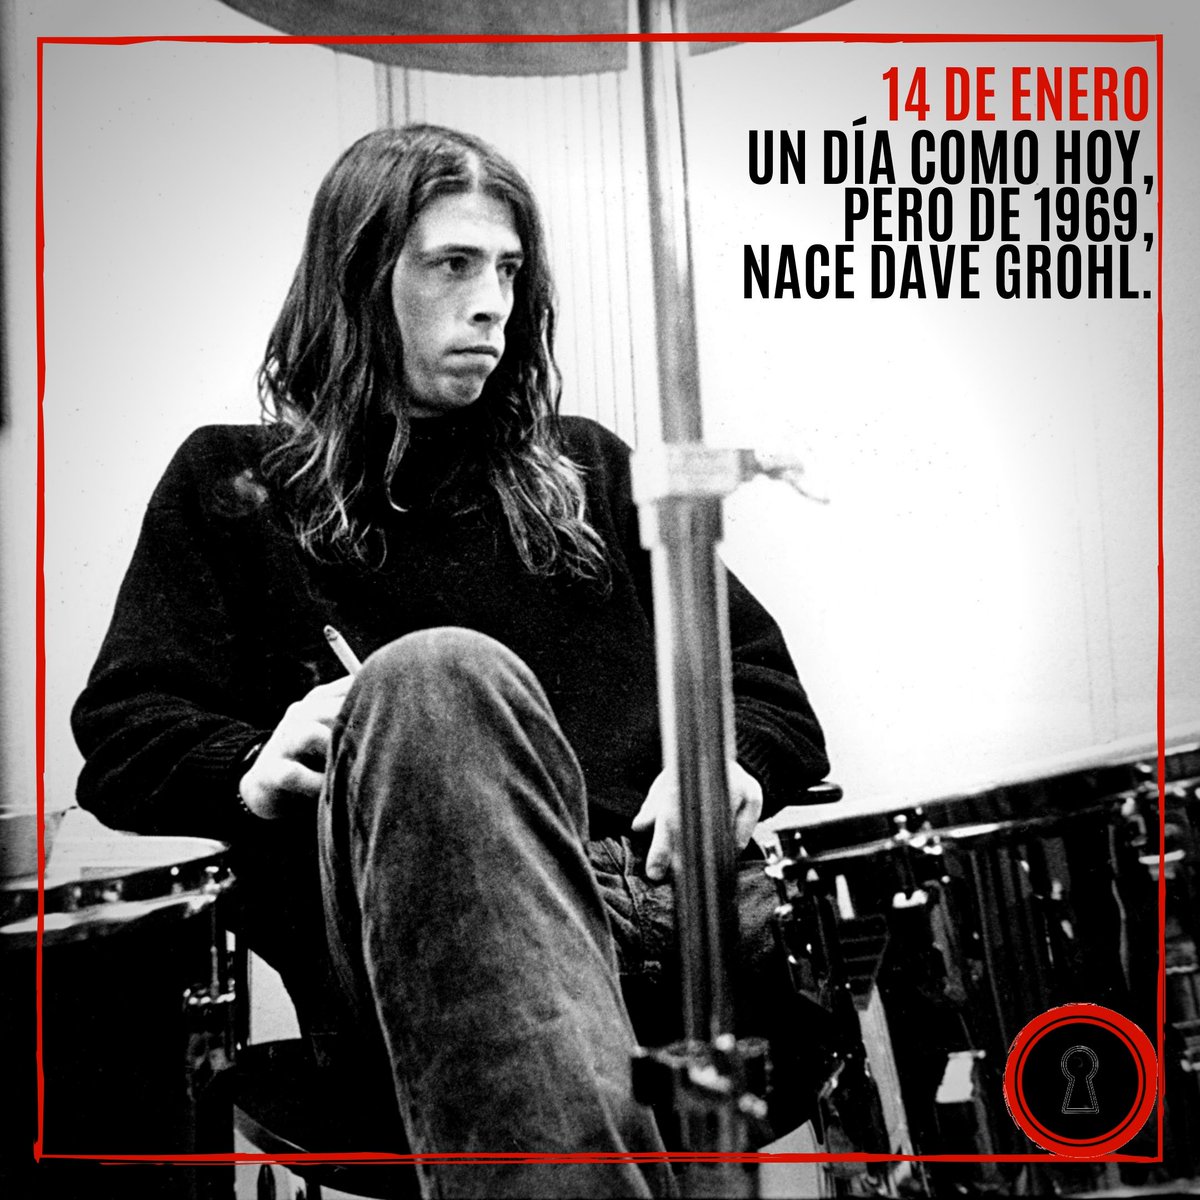 [#Efemérides 🧐]
.
#UnDíaComoHoy, hace 51 años, nacía #DaveGrohl.
.
.
#DaveGrohl #Nirvana #FooFighters #Grunge #Rock #Nevermind #Inutero #Bleach #Music #NirvanaFans